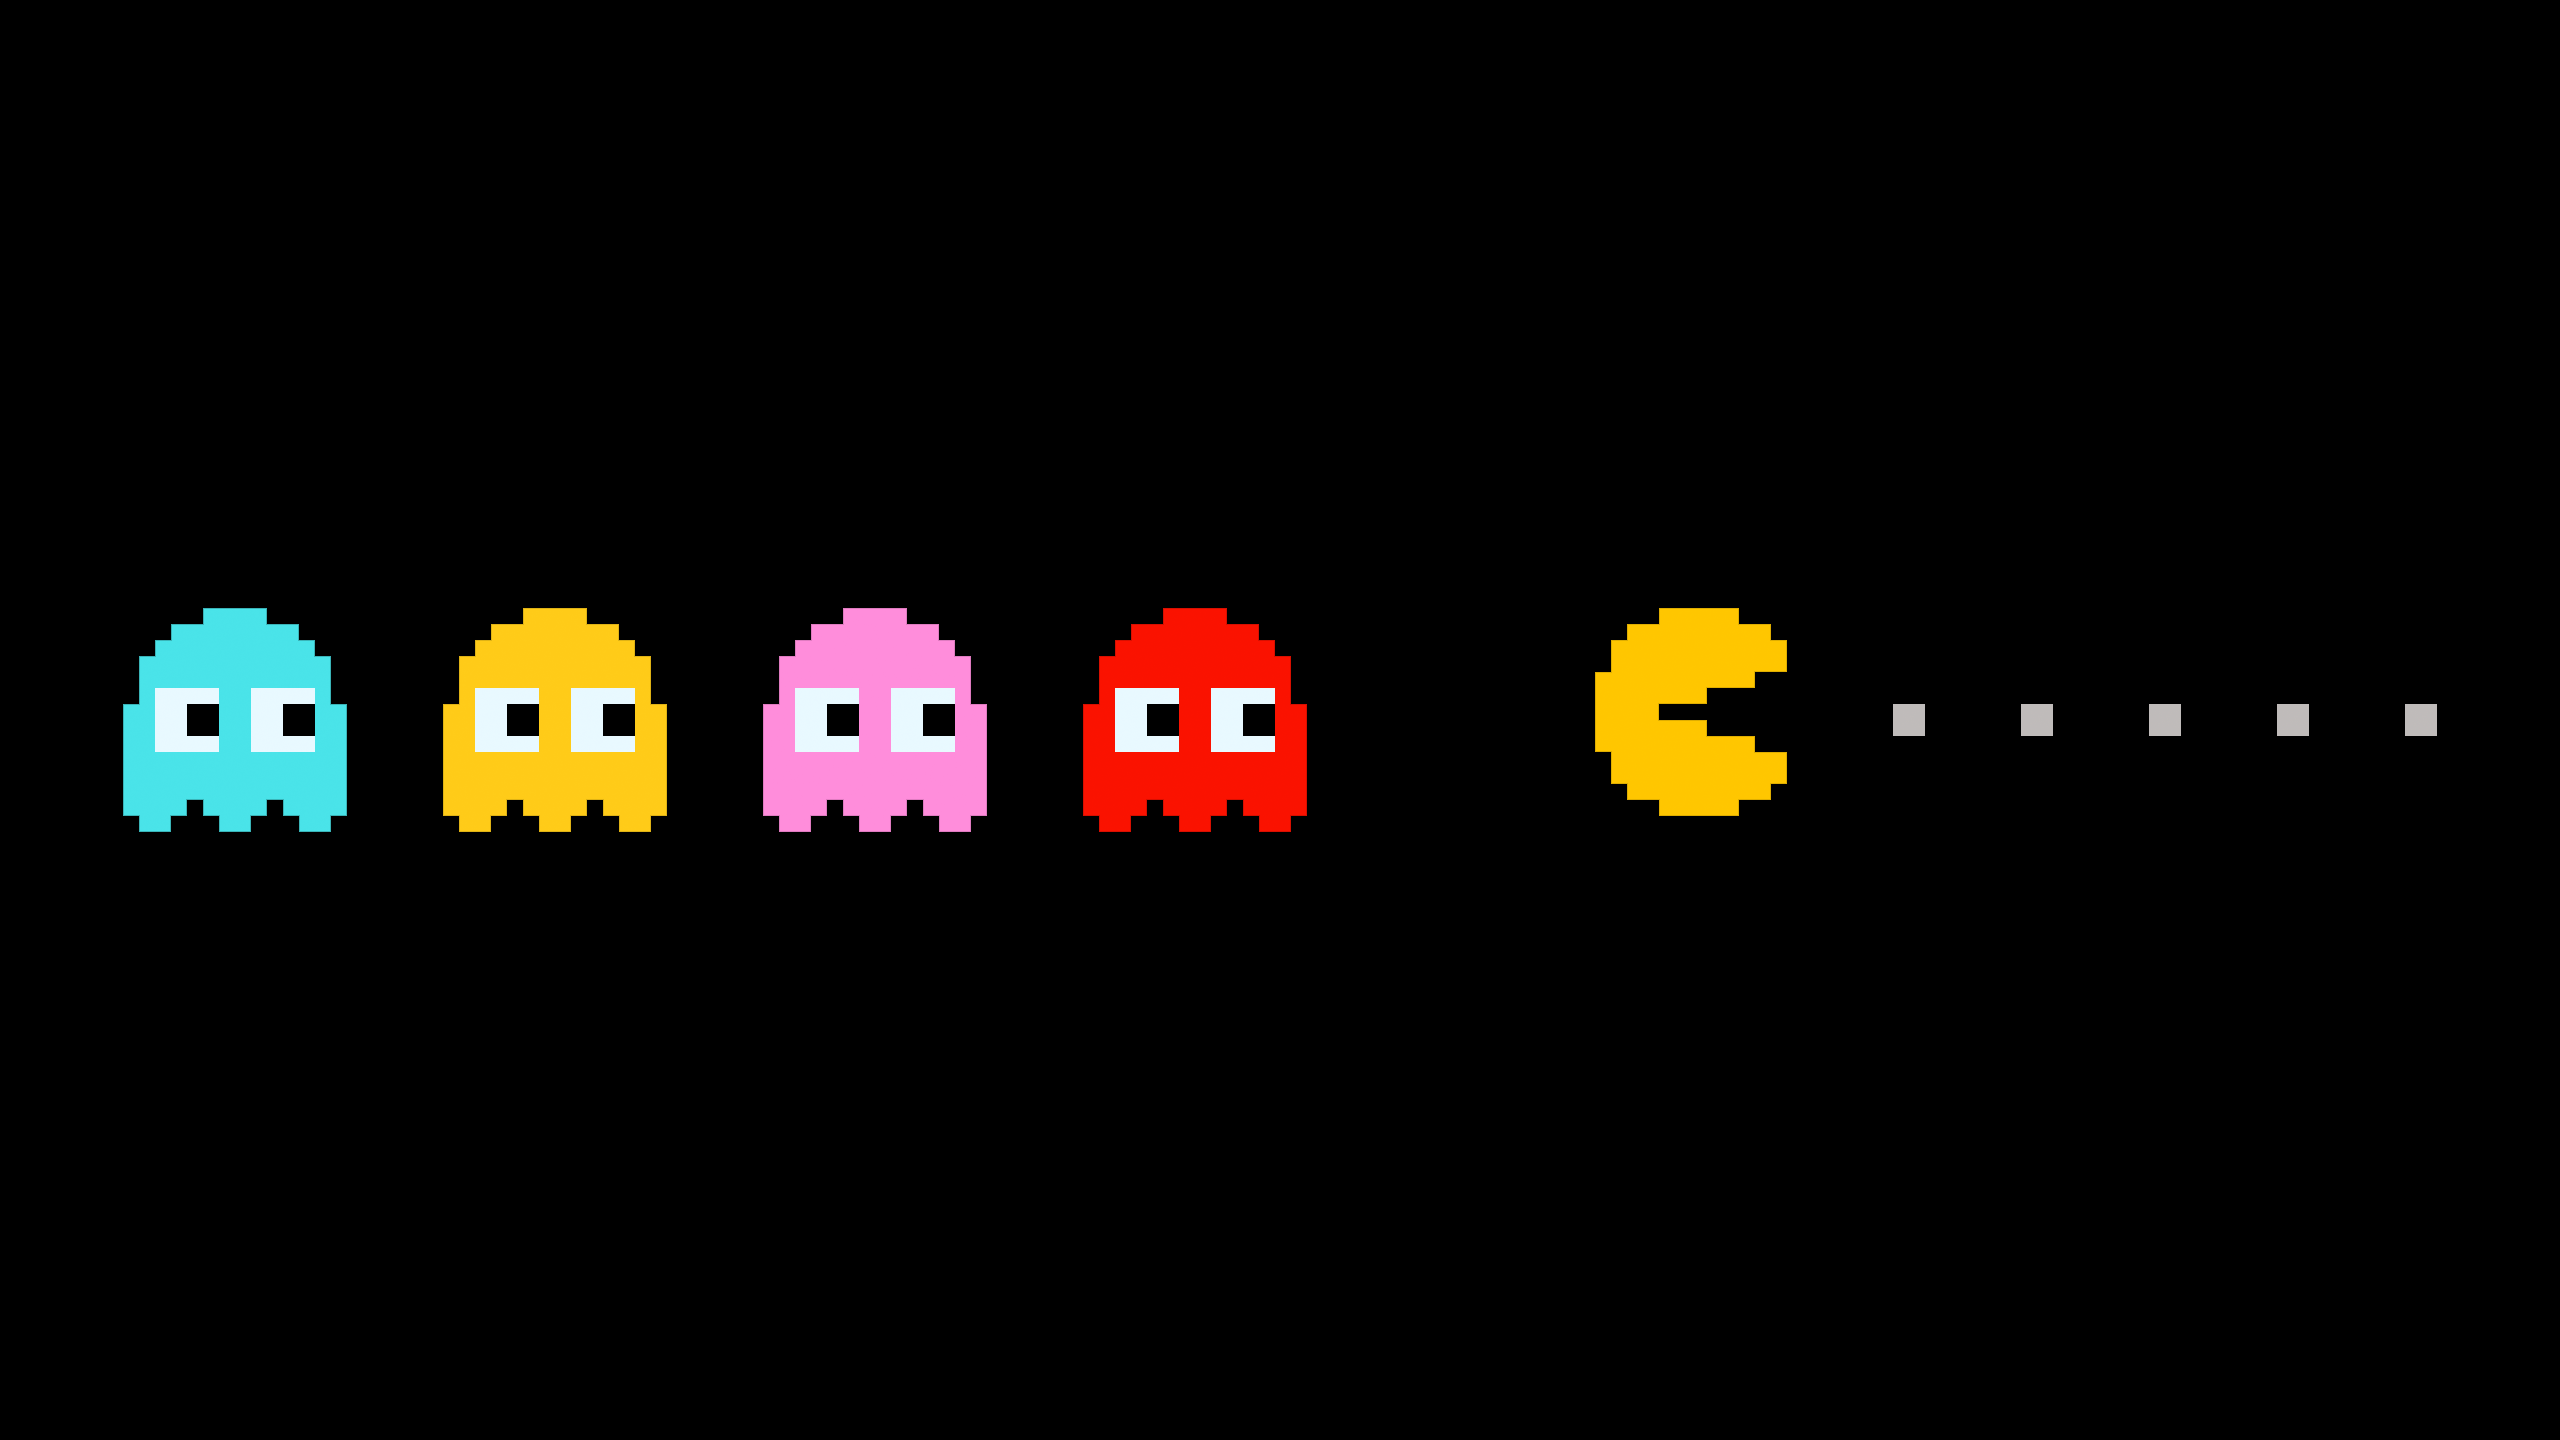 Pacman Wallpaper (07). Game character design, Video